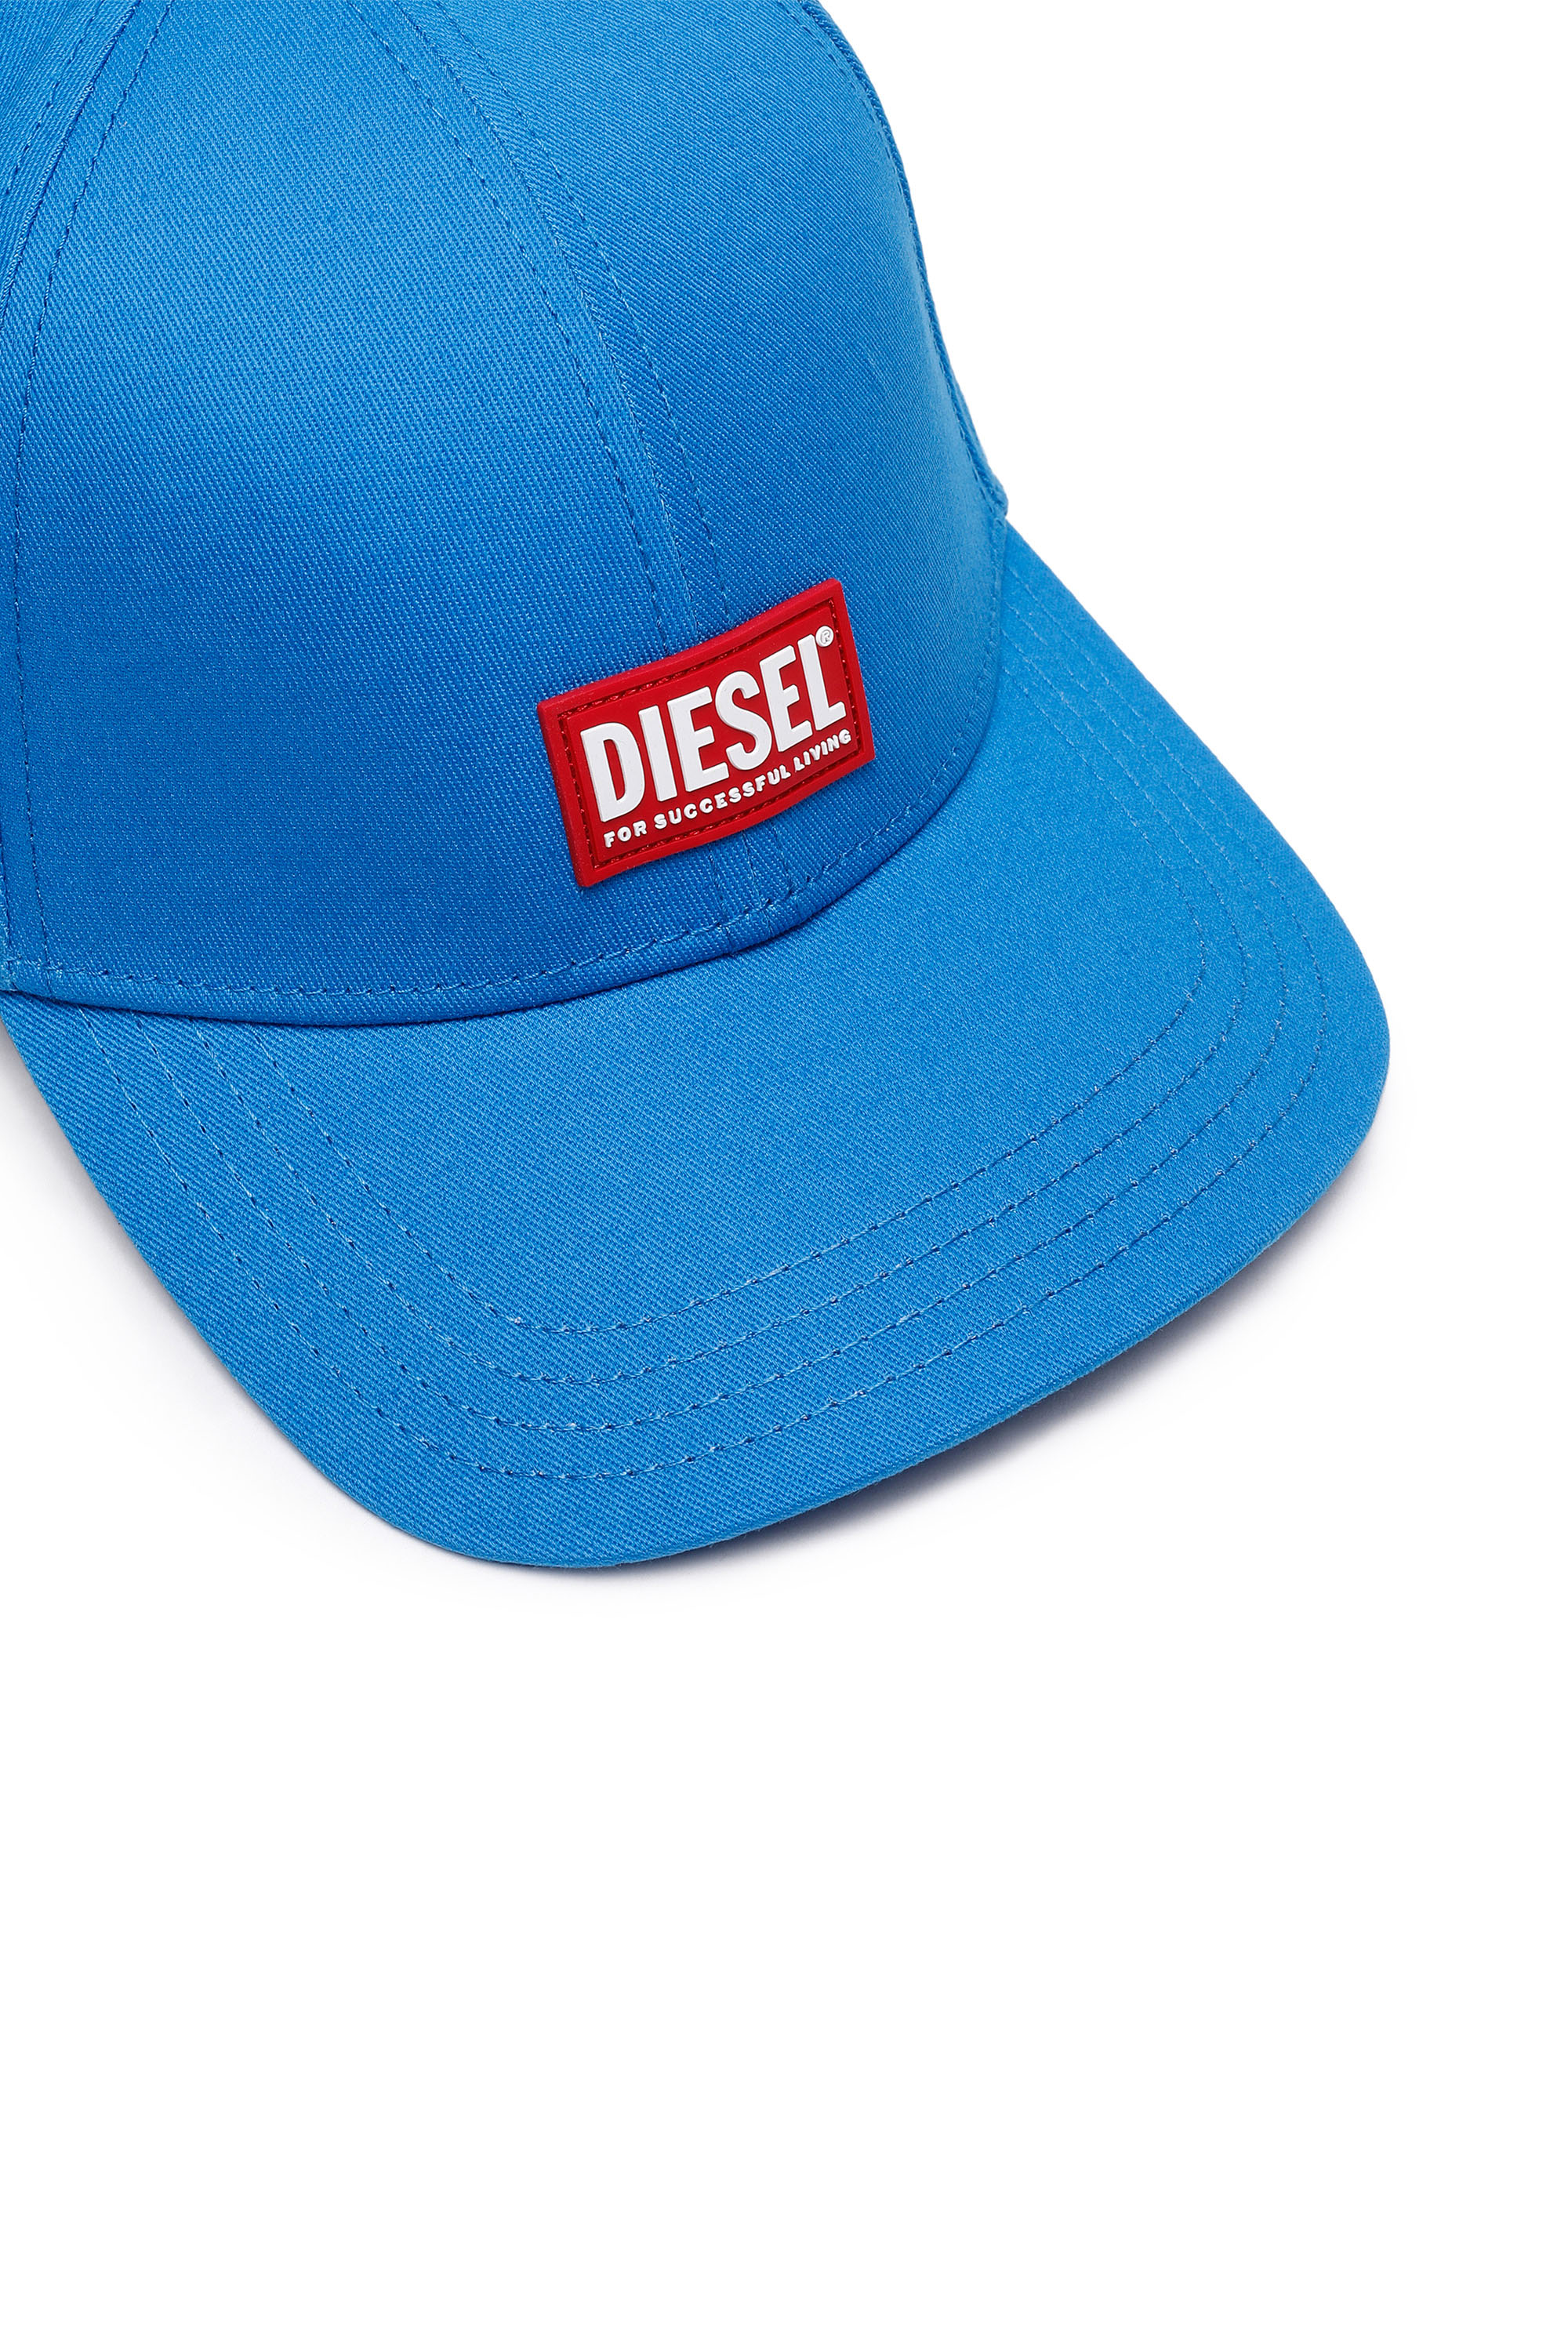 Diesel - CORRY-GUM, Blue - Image 3